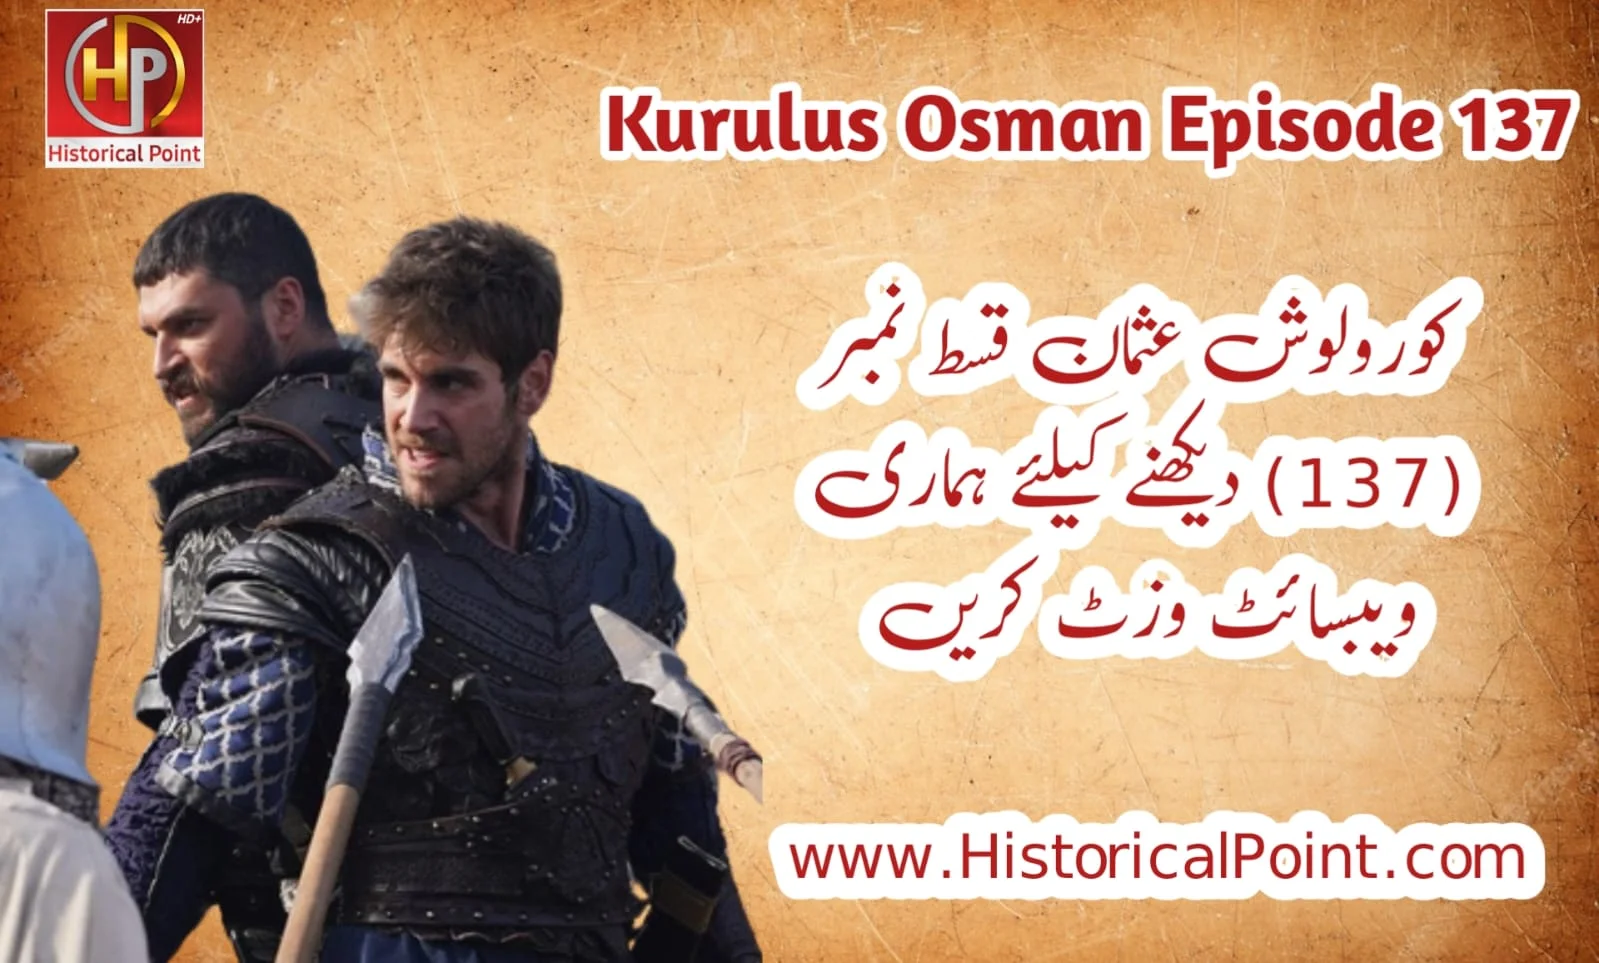 Kurulus Osman Episode 137 with urdu subtitles